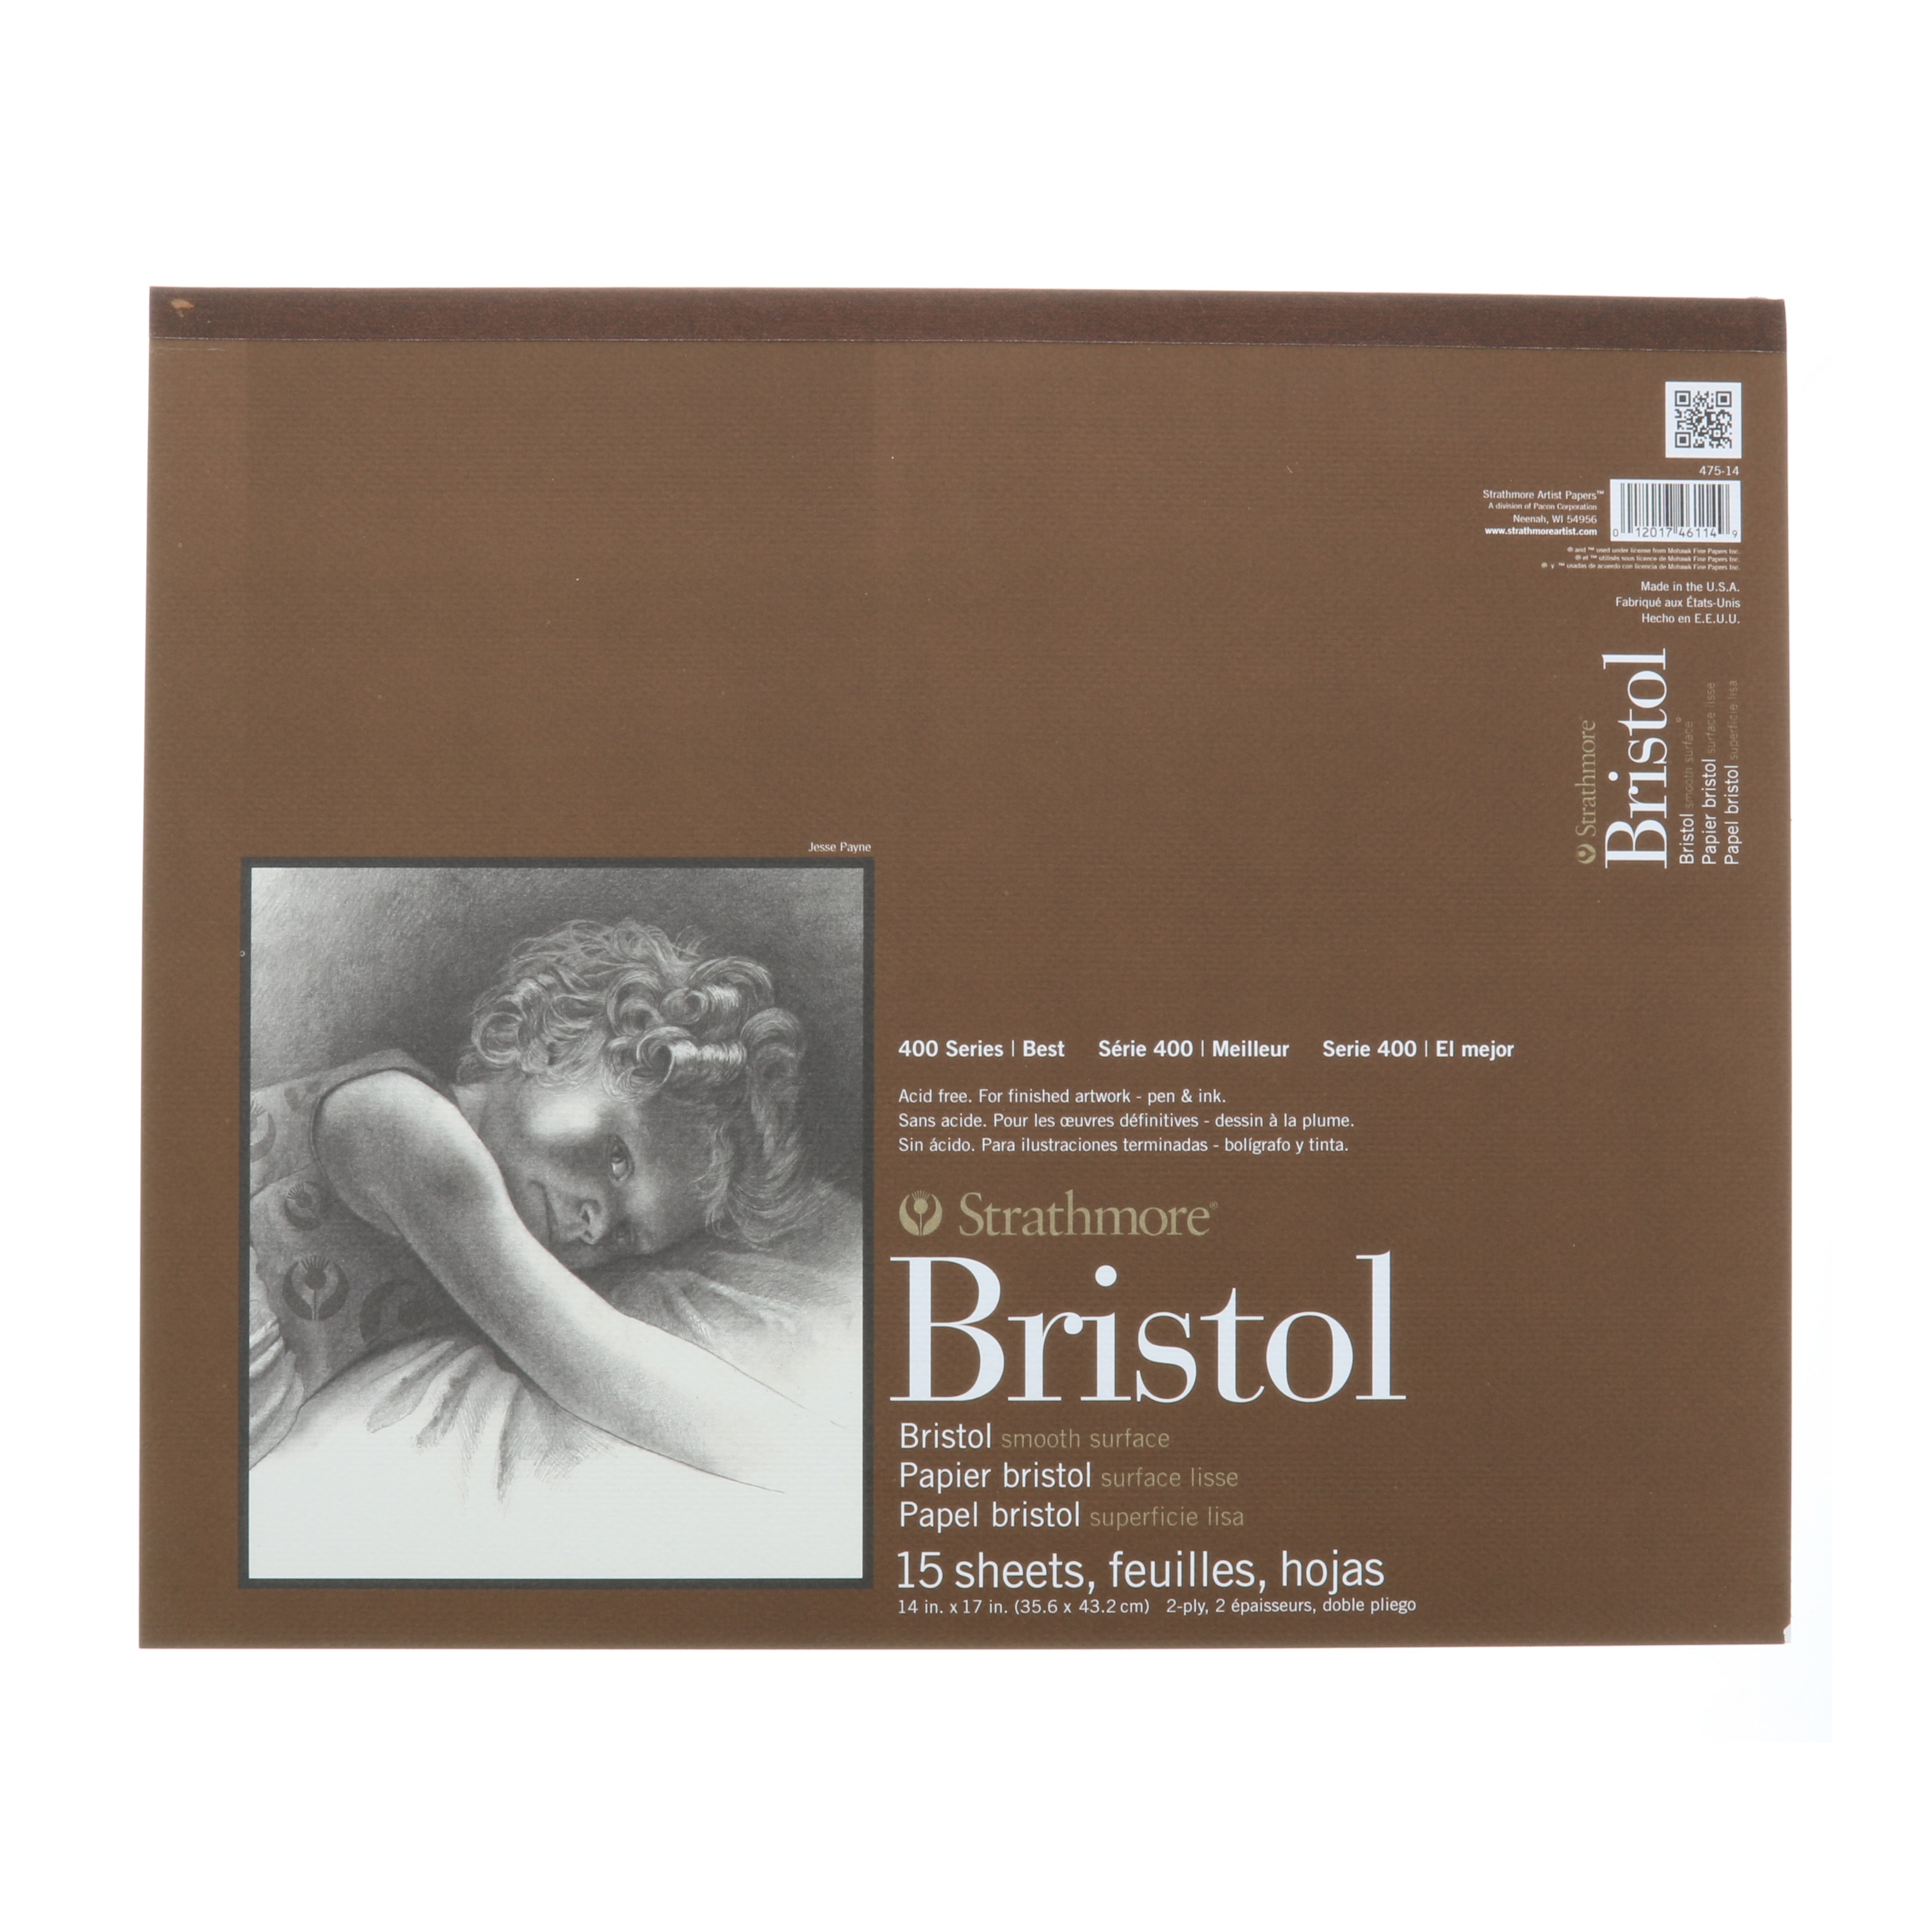 Strathmore Bristol Paper Pad, 400 Series, Smooth, 14" x 17"